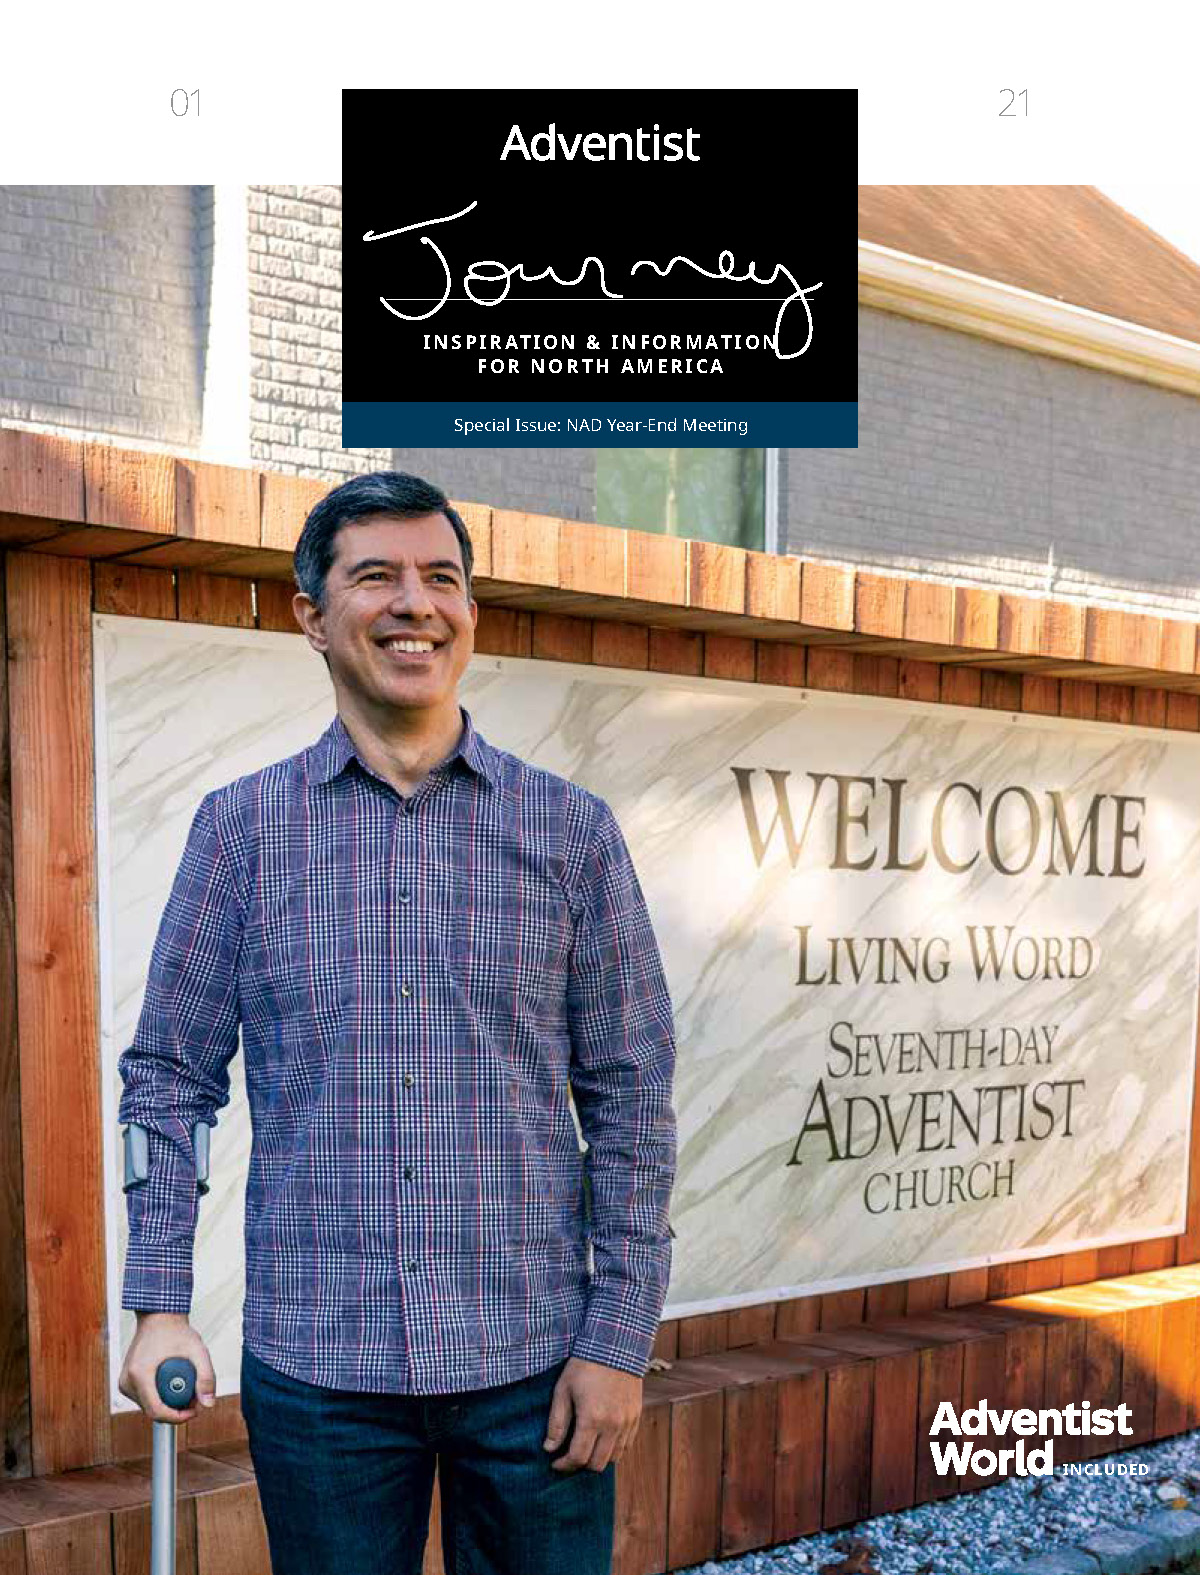 Adventist Journey magazine cover featuring Kleyton Feitosa